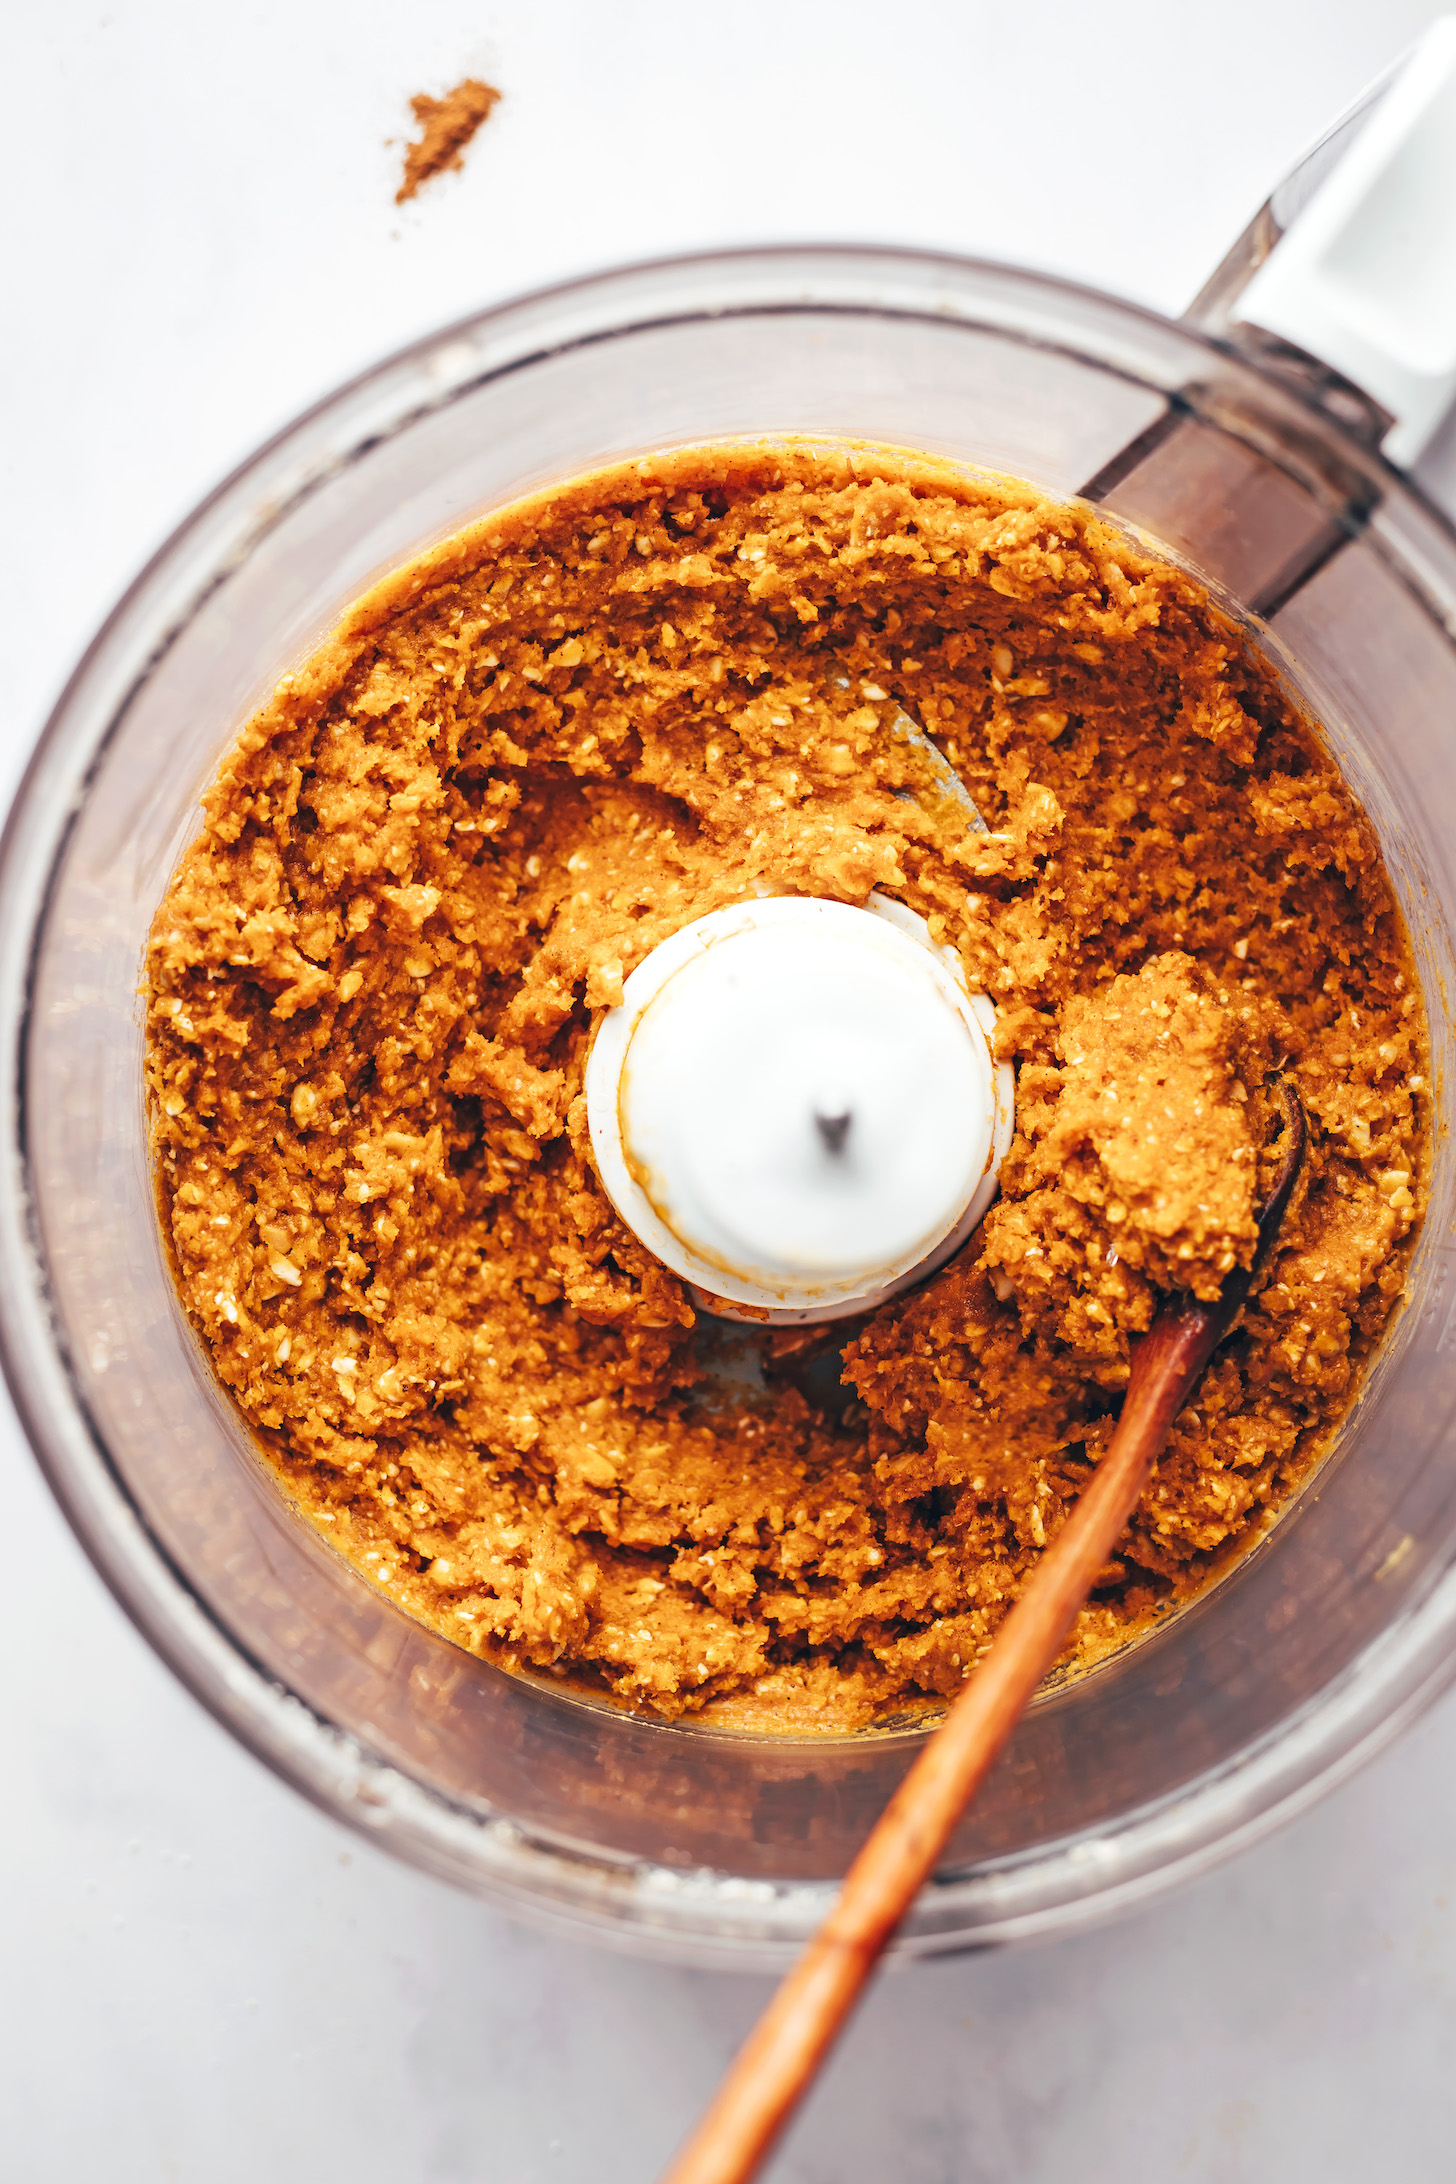 Peanut butter pumpkin oat mixture in a food processor